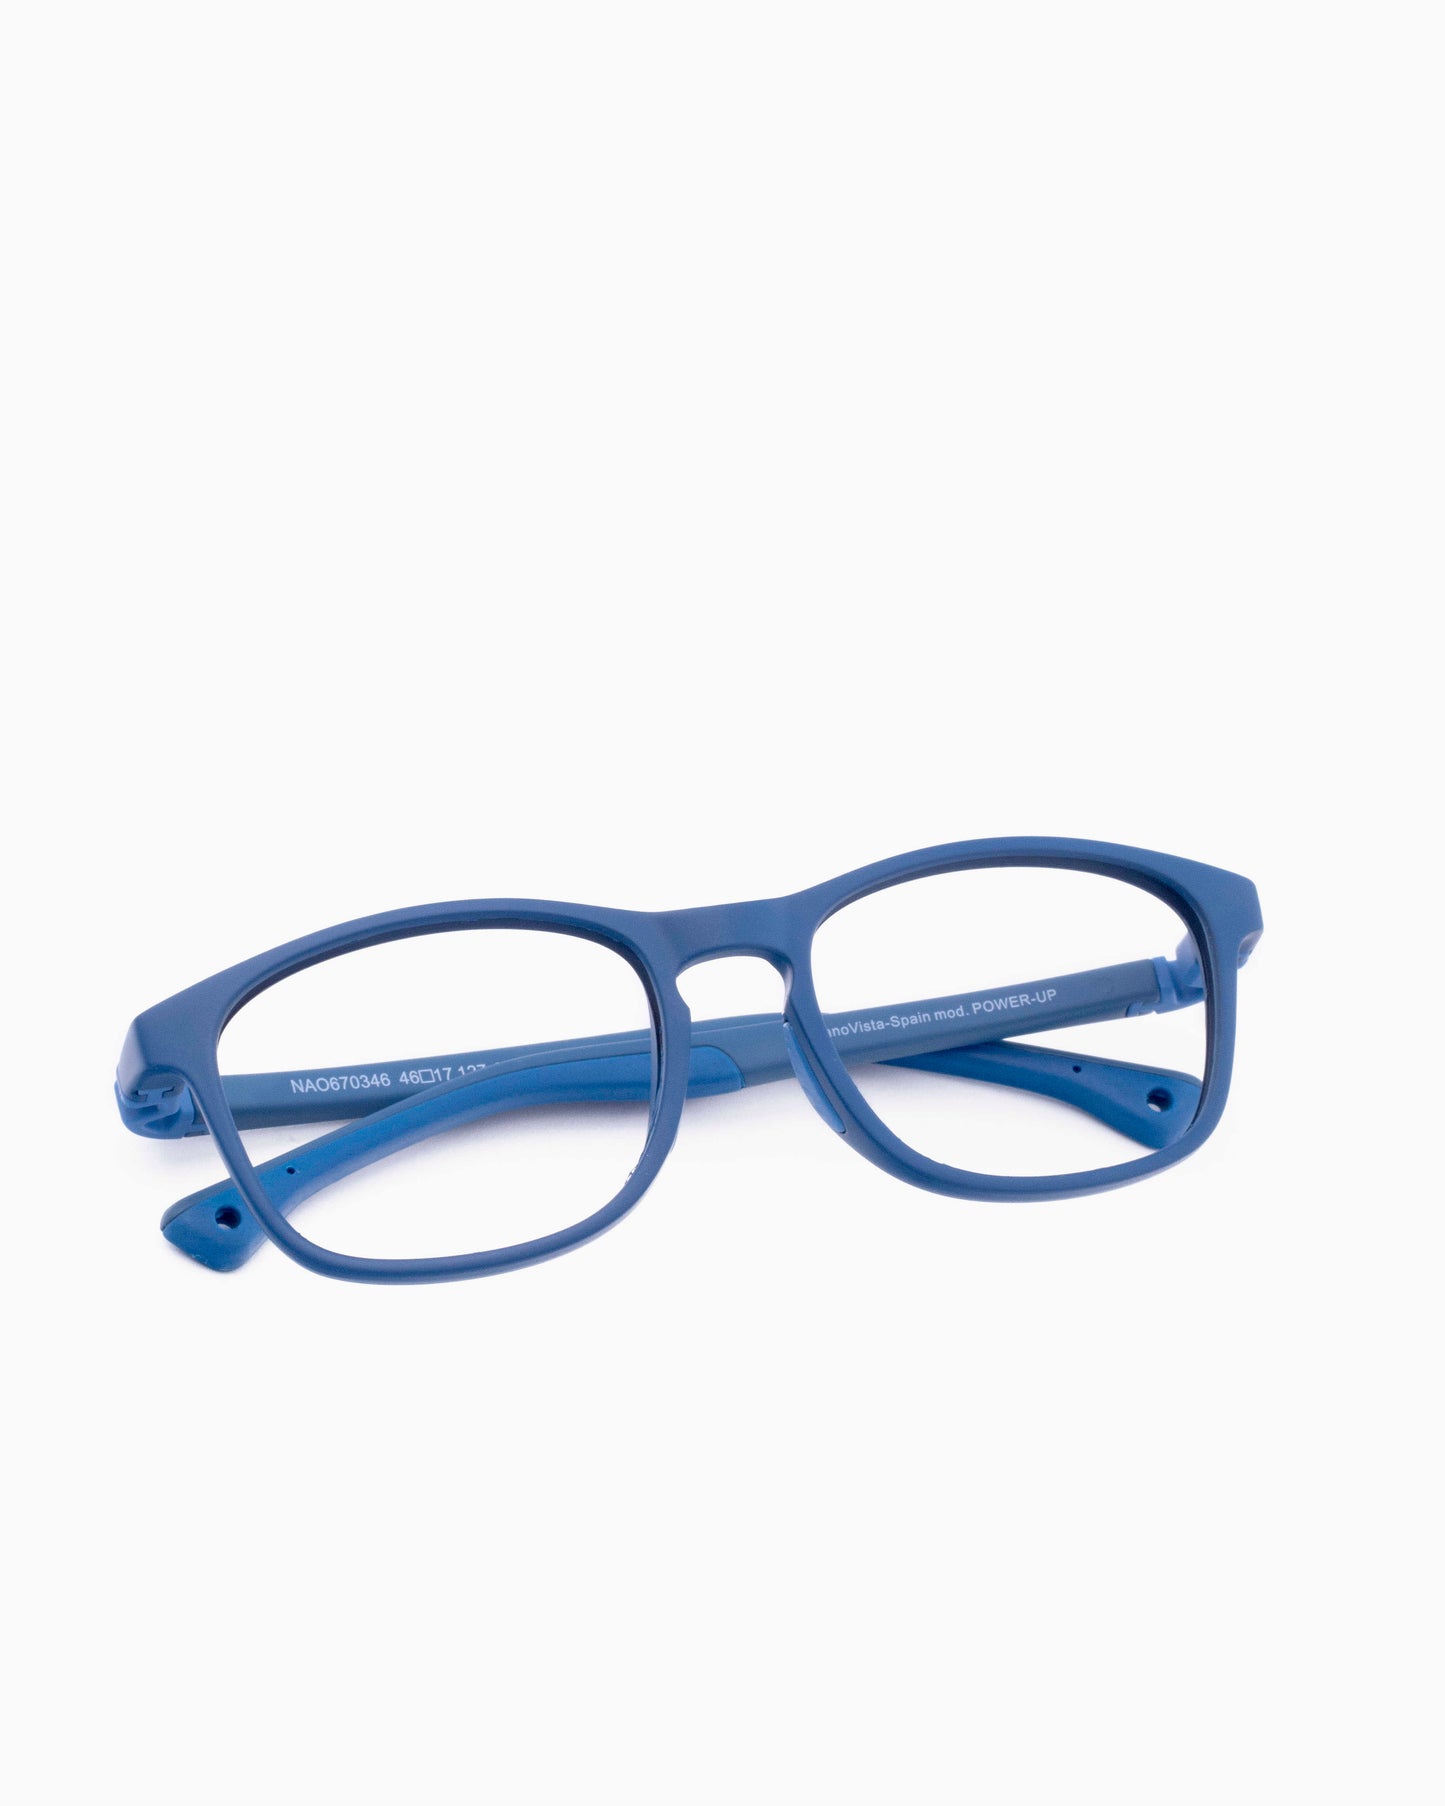 Nanovista Kids - POWERUP - MTMARMAR | glasses bar